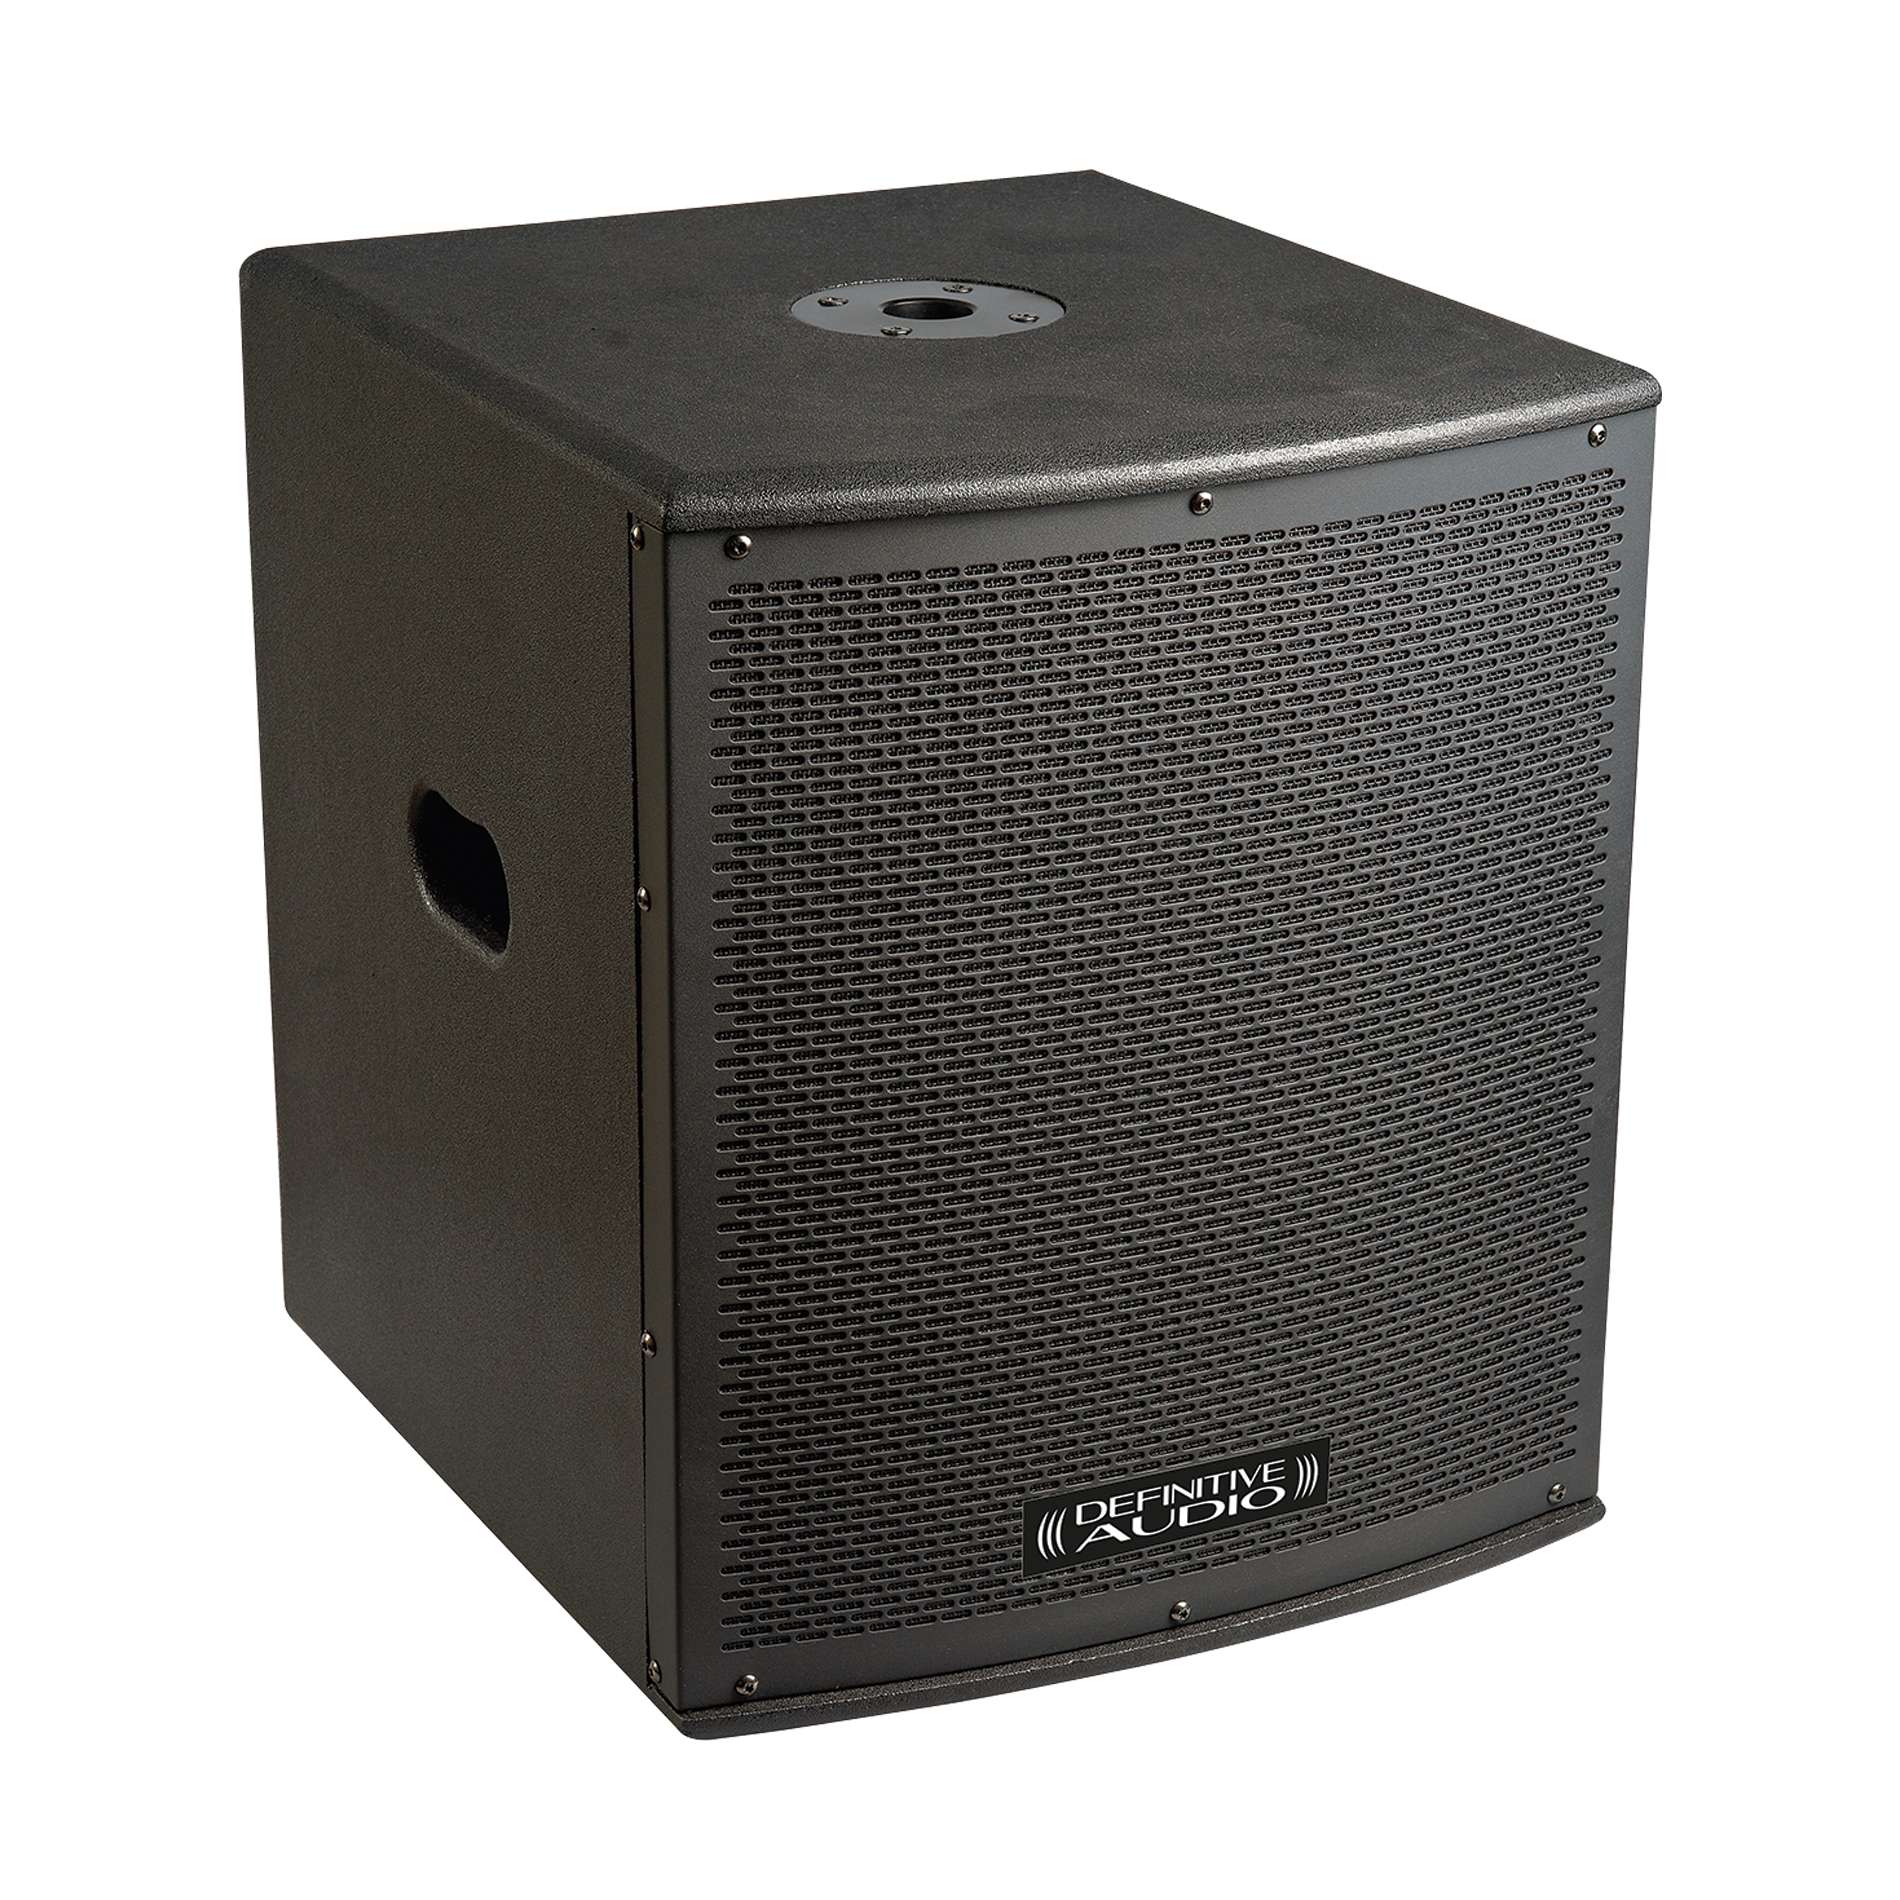 Definitive Audio Koala Neo 1500 Tri - Complete PA system - Variation 3